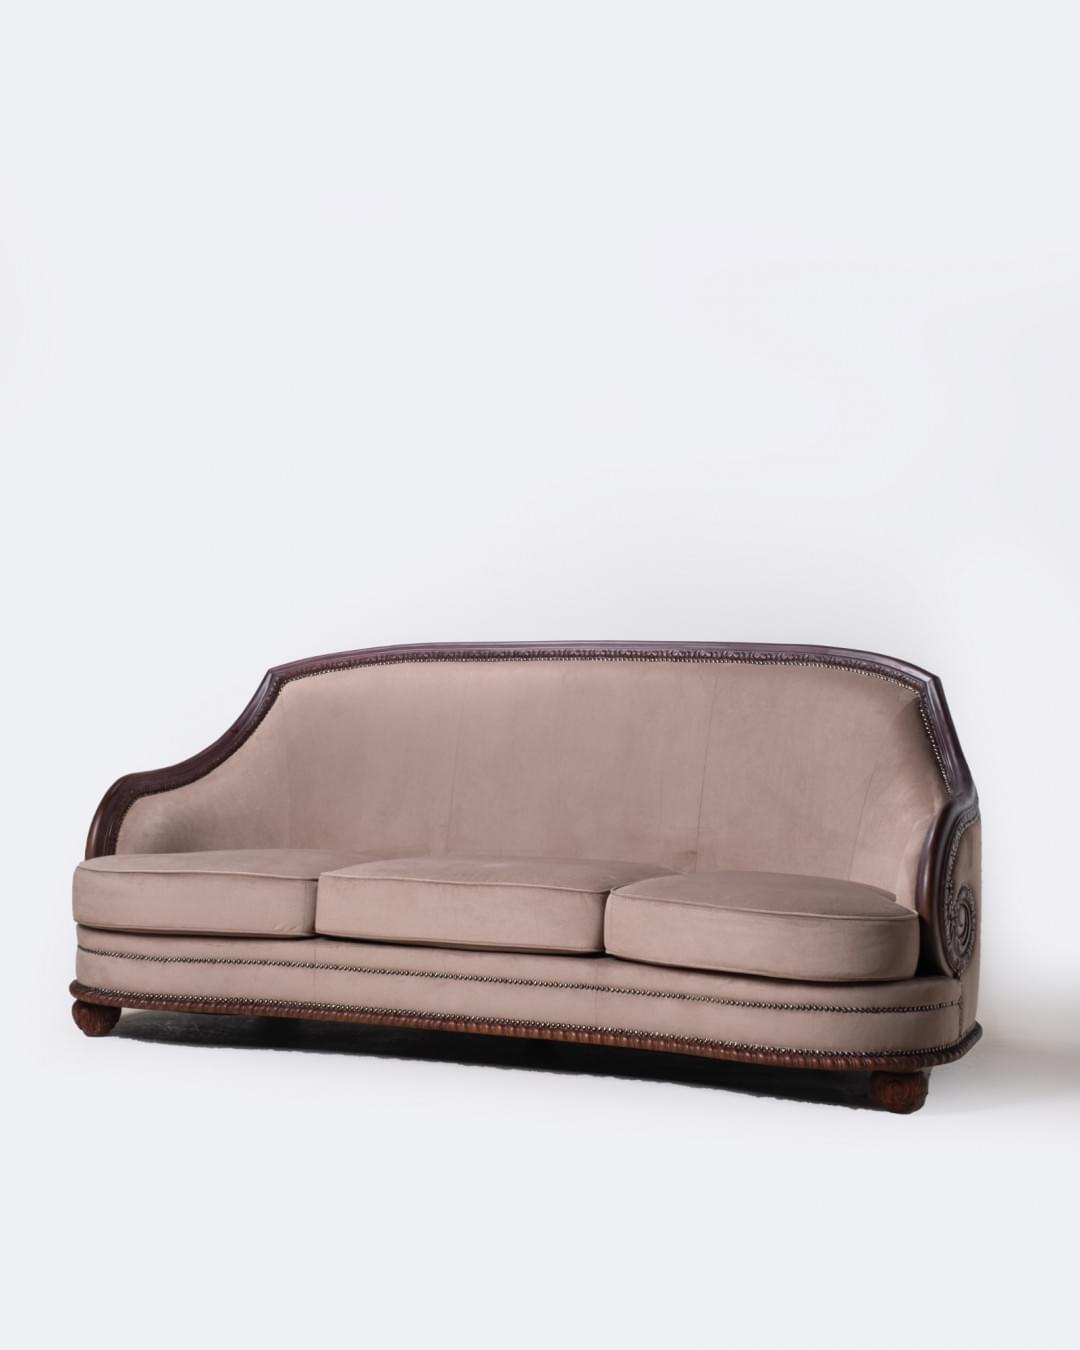 SAVANNAH SOFA from Lifetime Design Furniture